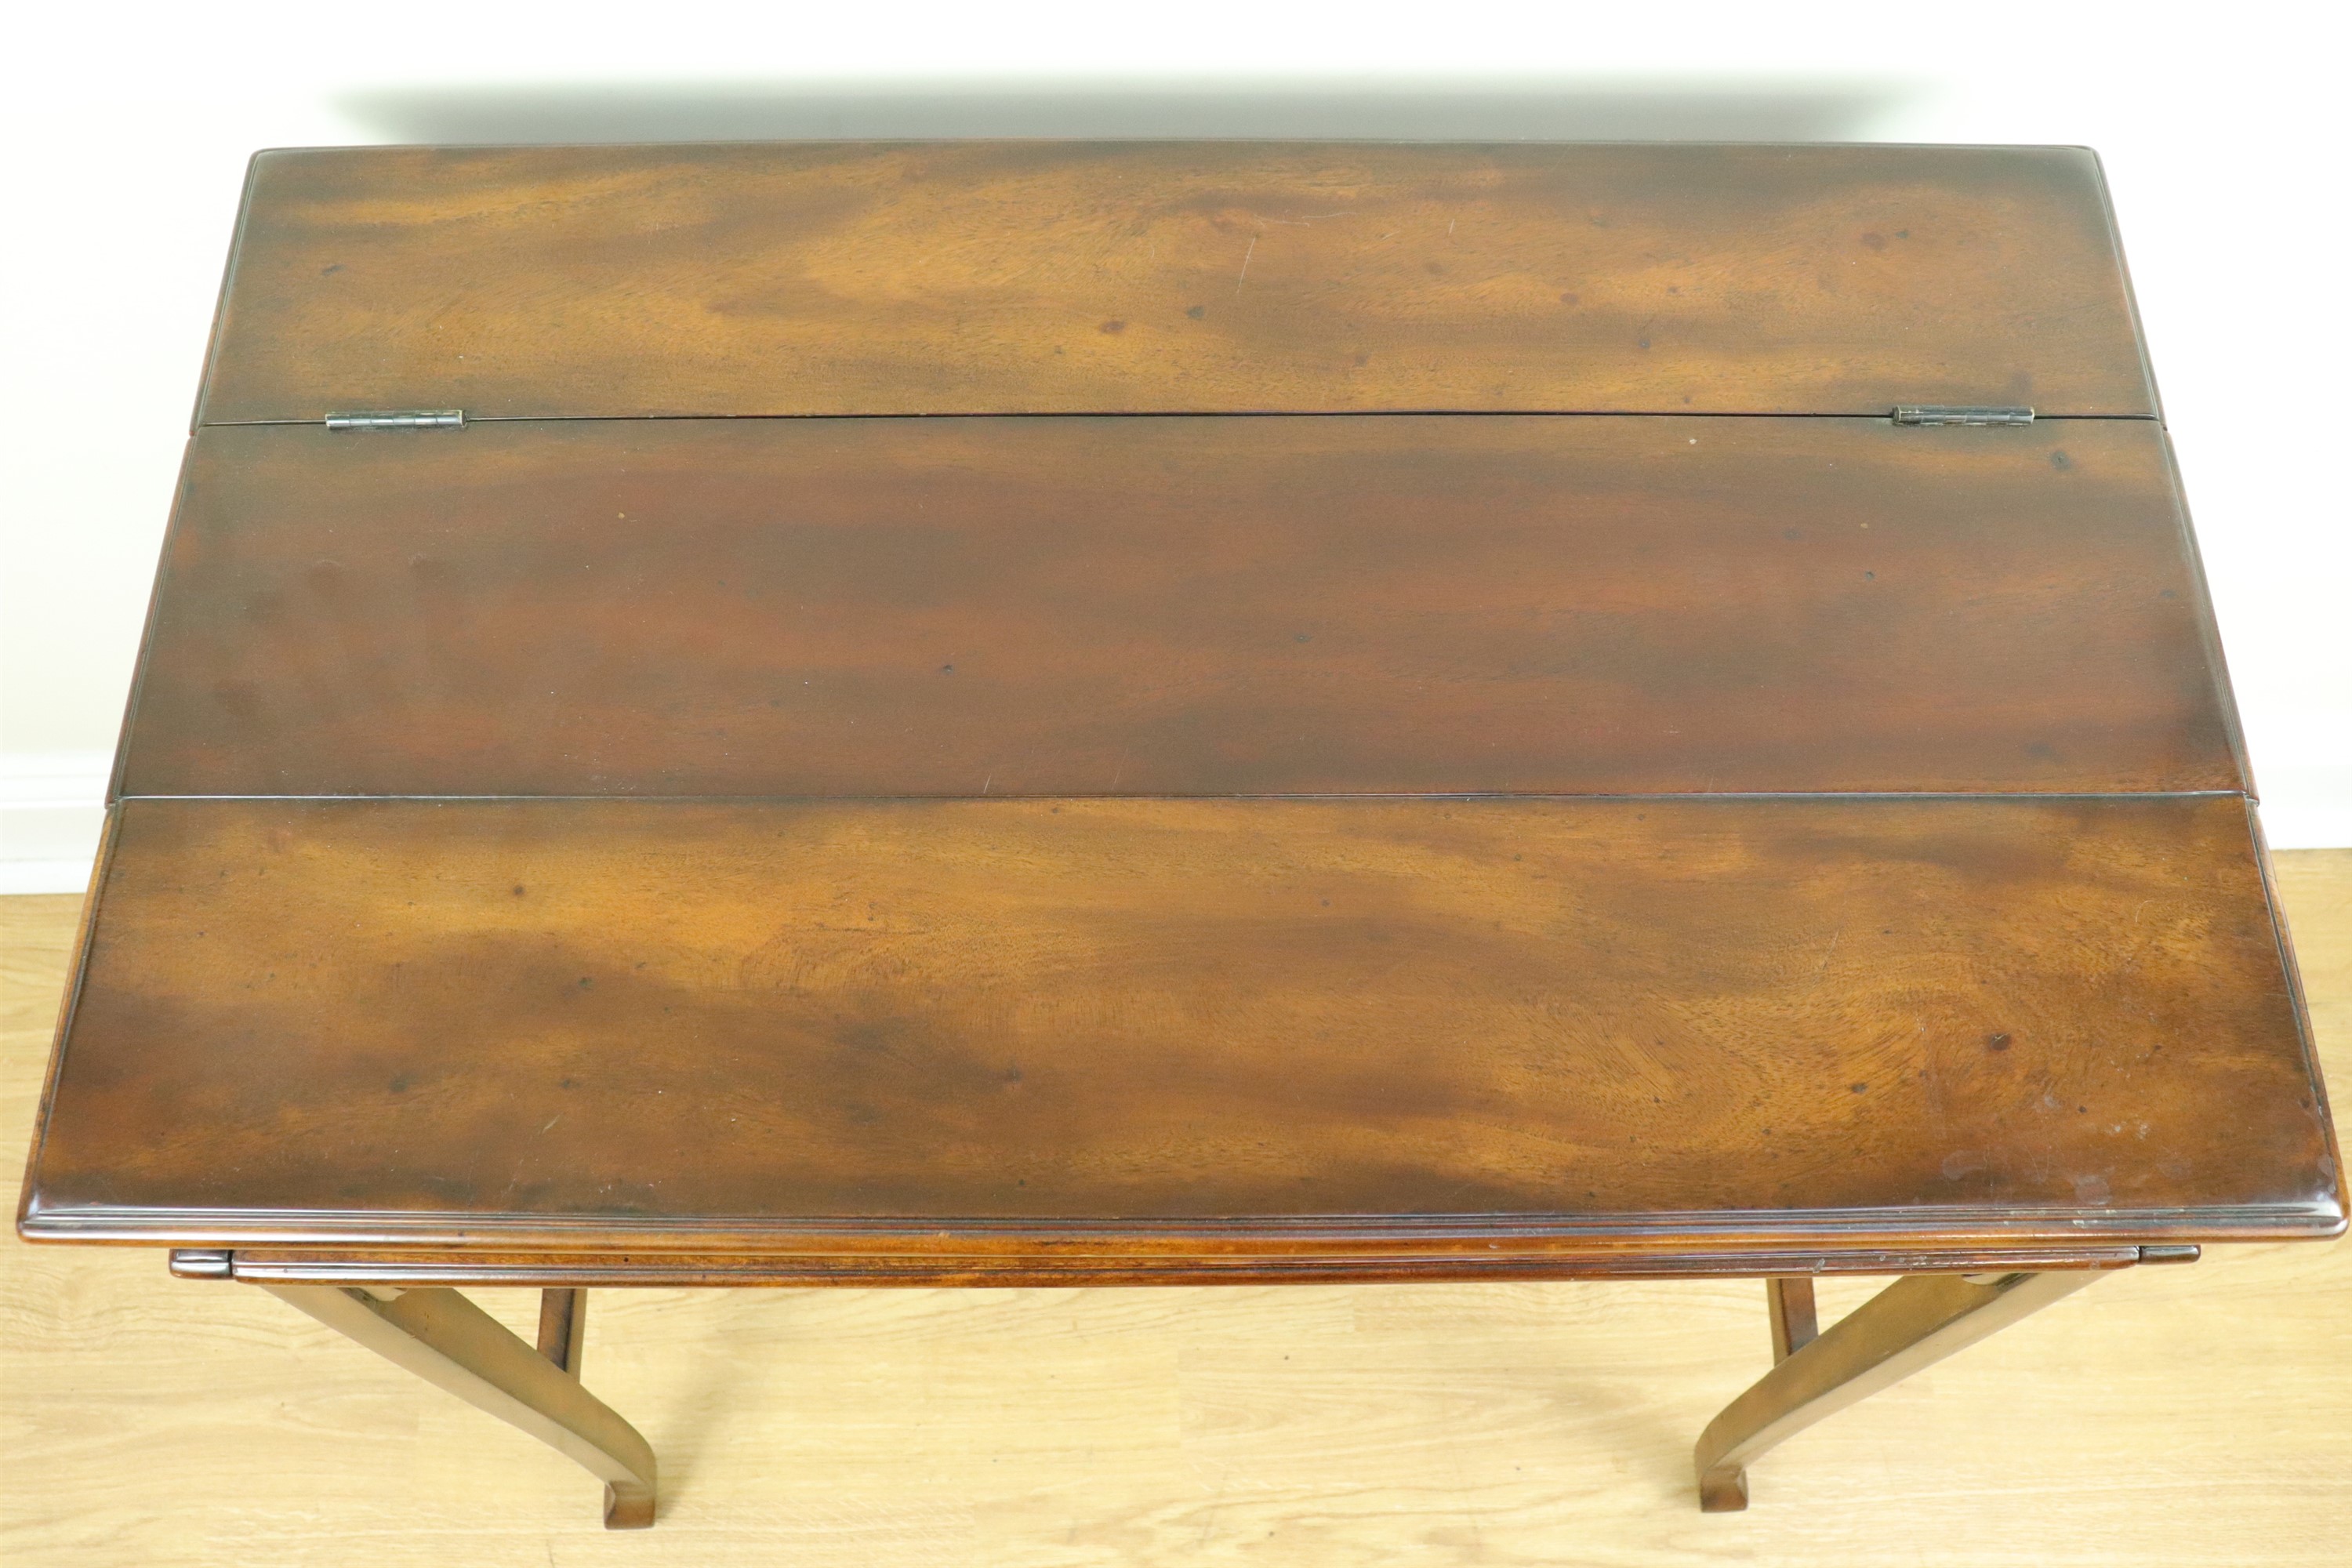 A Theodore Alexander Kaye mahogany campaign style desk, 74 cm x 44 cm x 79 cm - Image 4 of 4